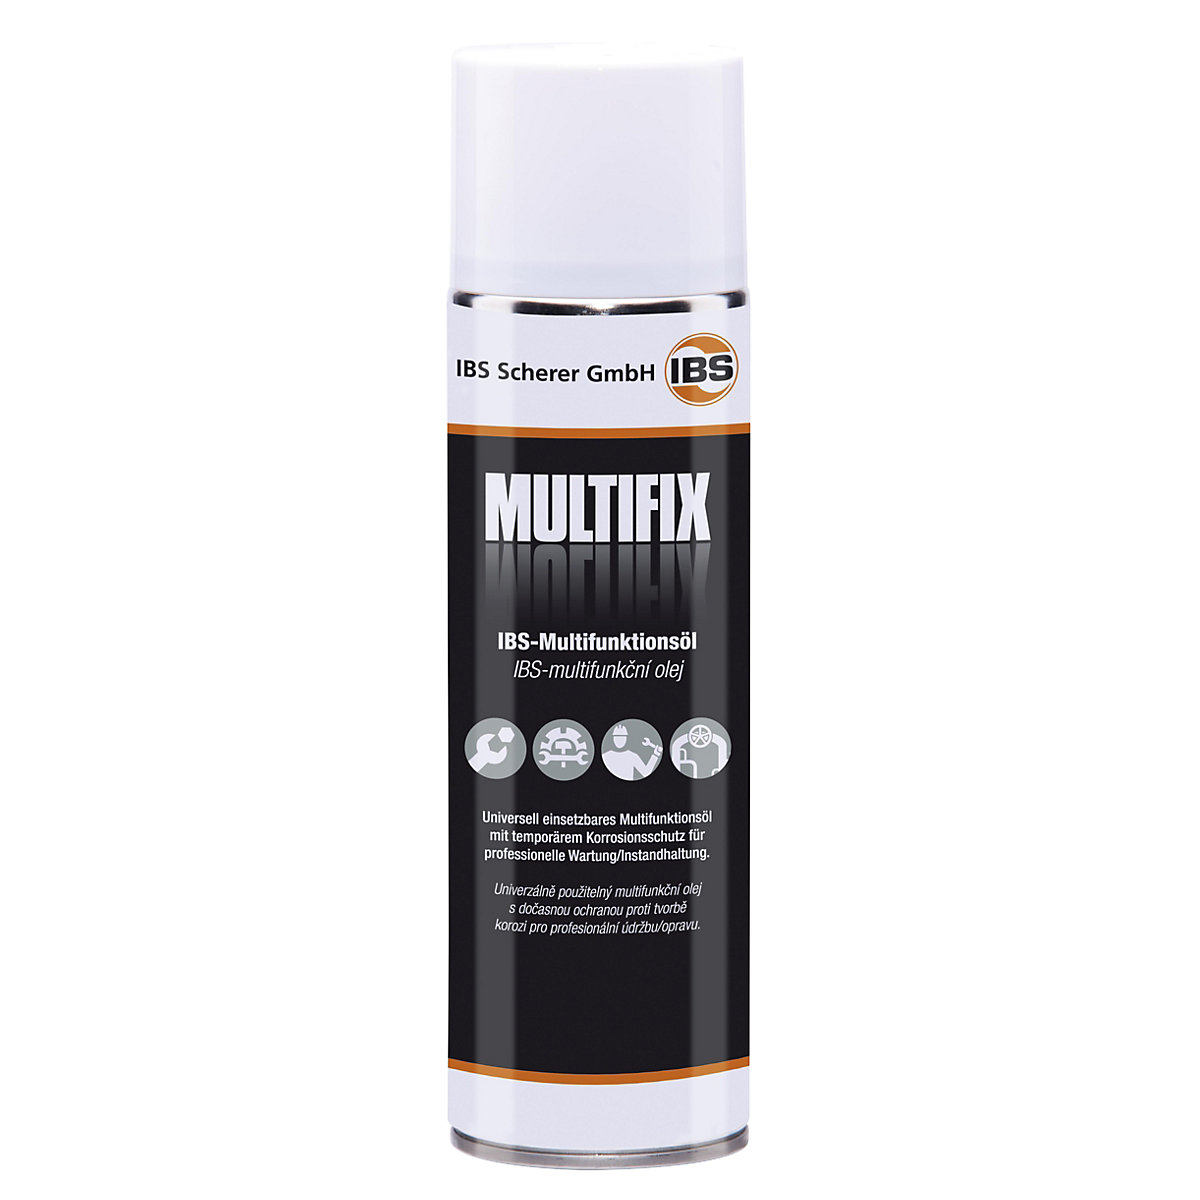 MULTIFIX multifunkcionális olaj - IBS Scherer